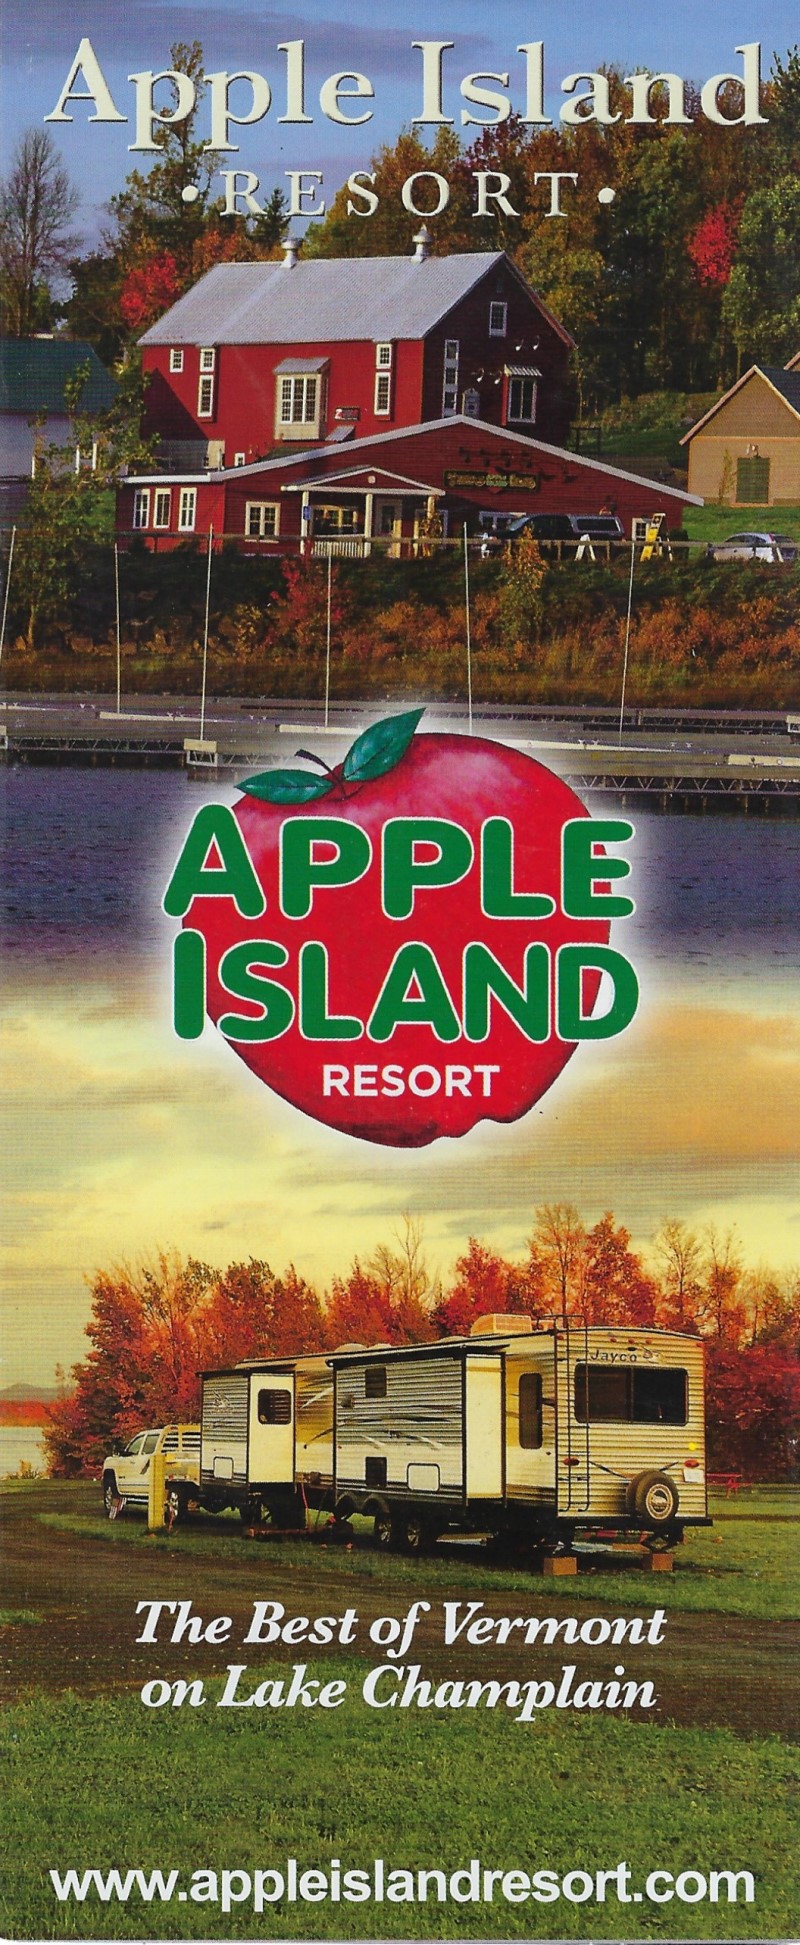 Apple Island Resort brochure thumbnail